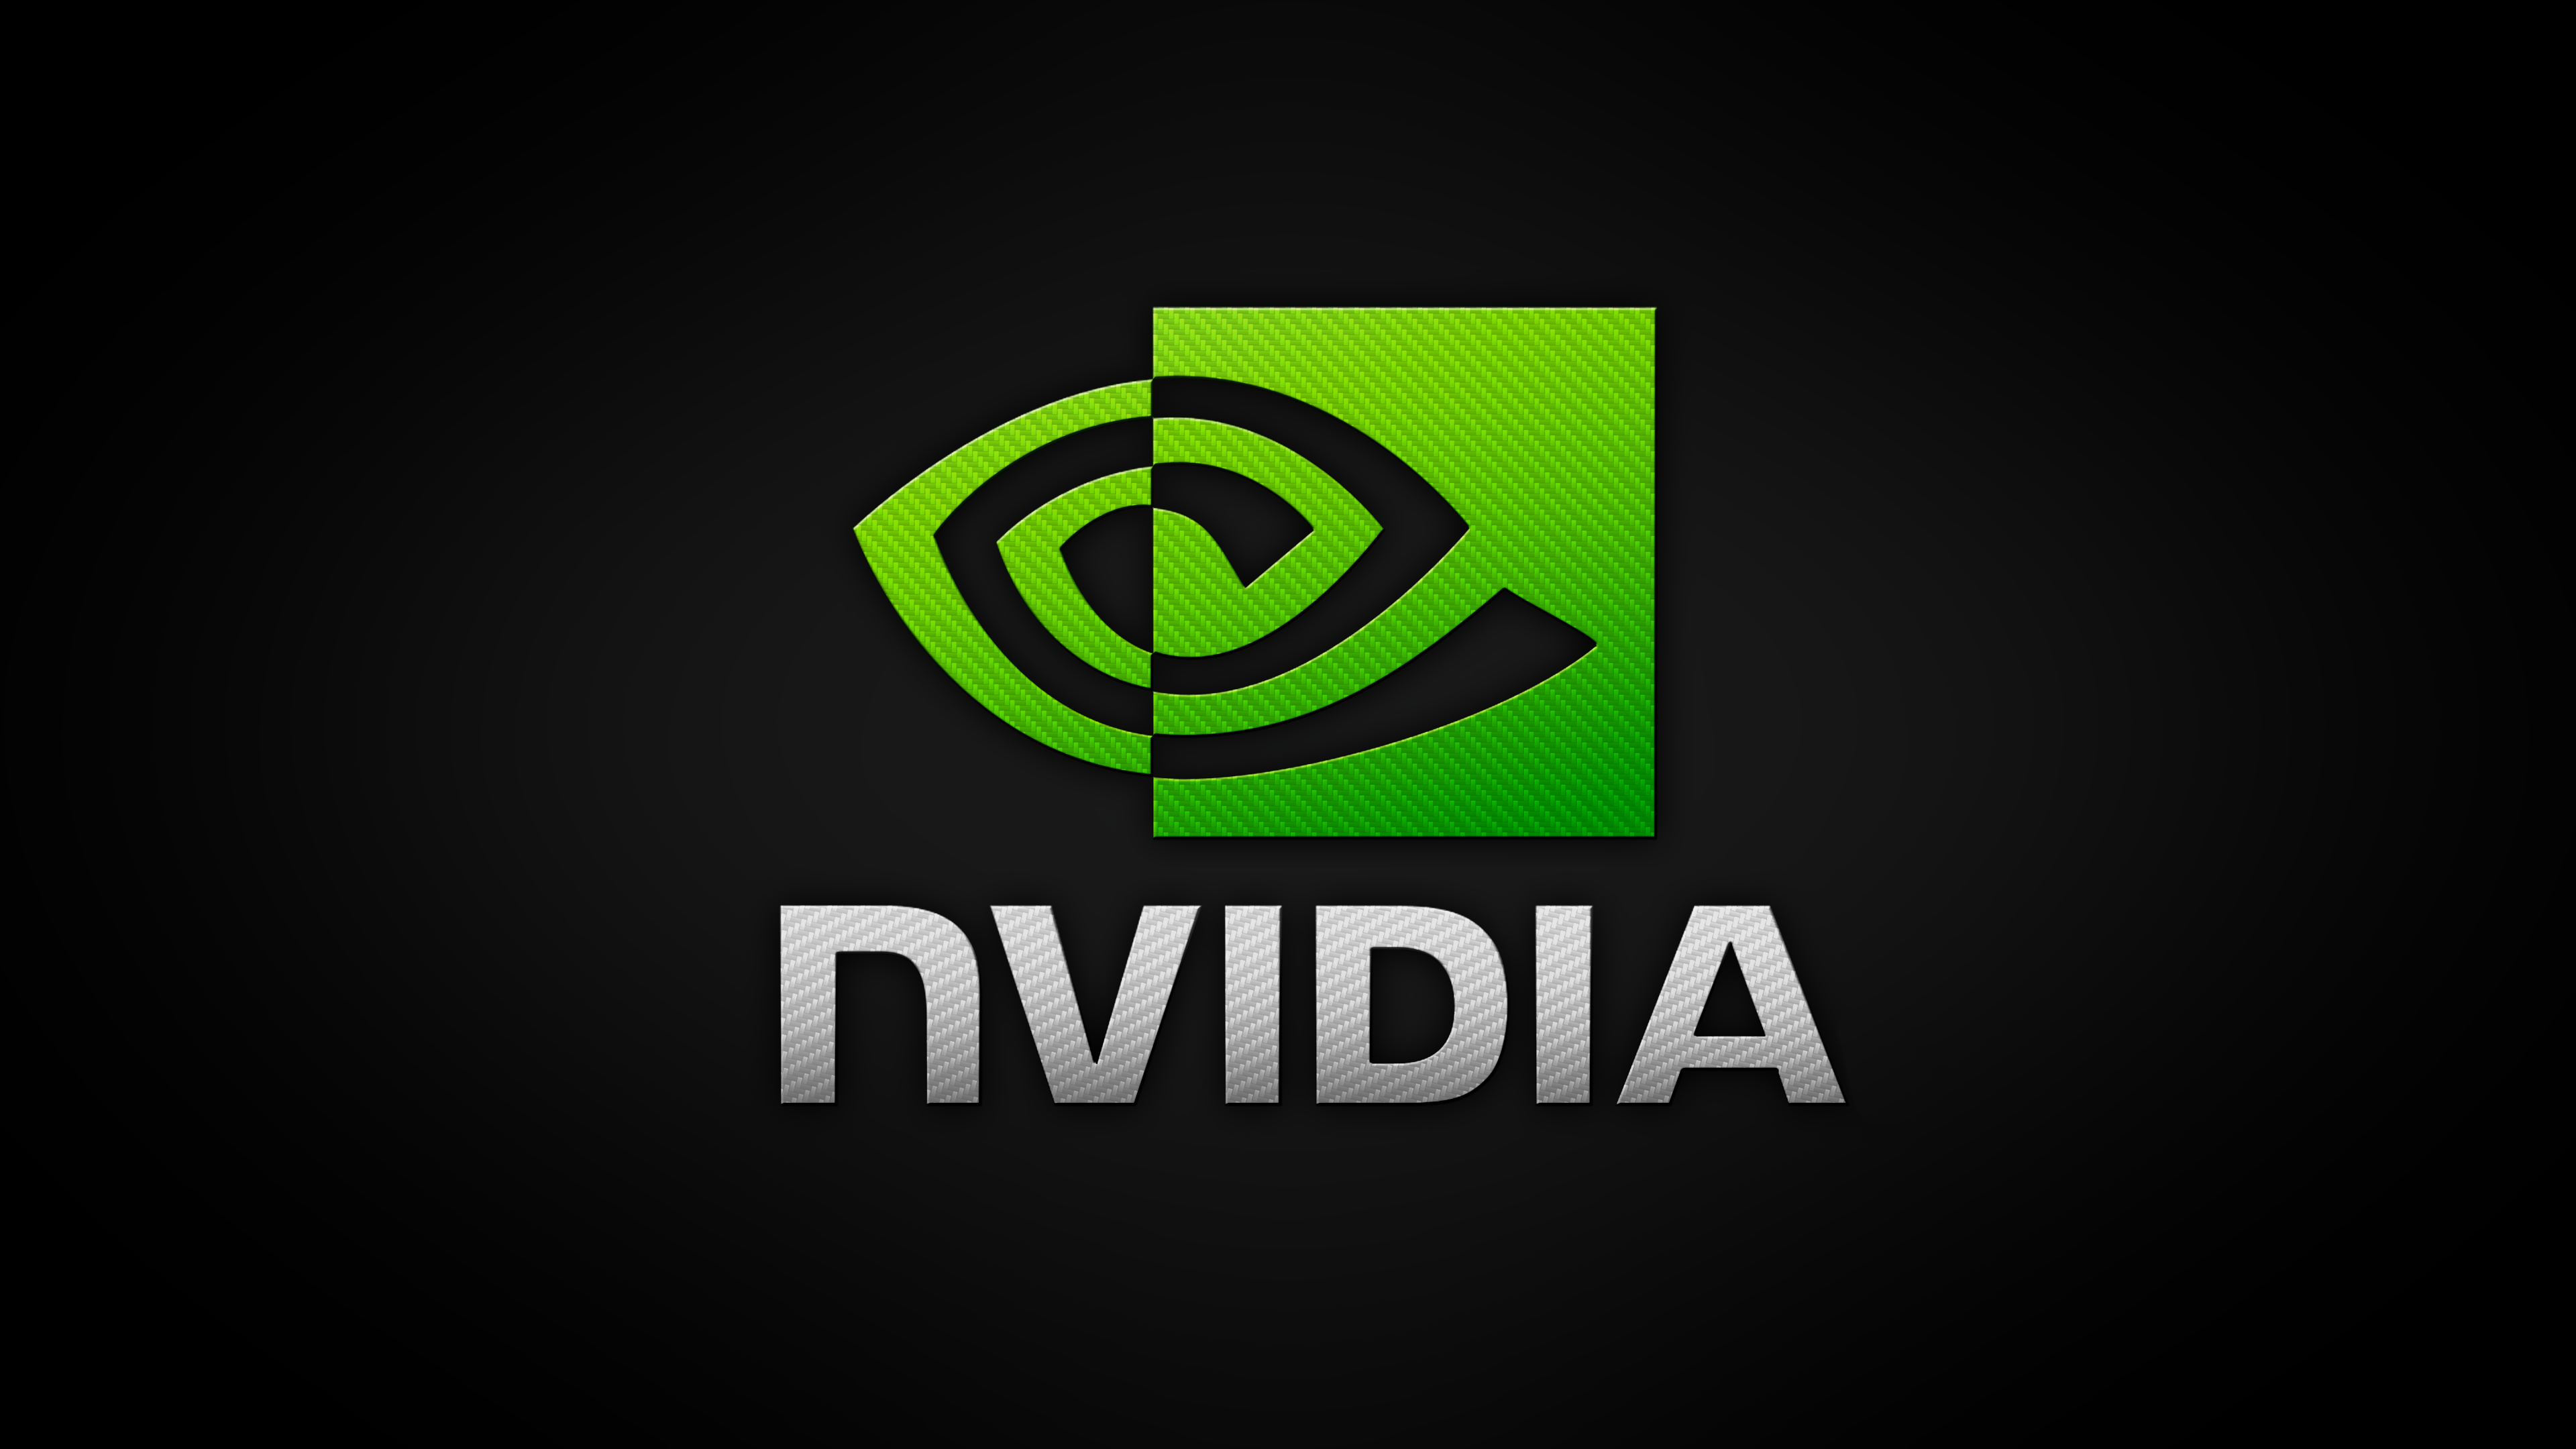 General 3840x2160 Nvidia logo simple background hardware black background technology